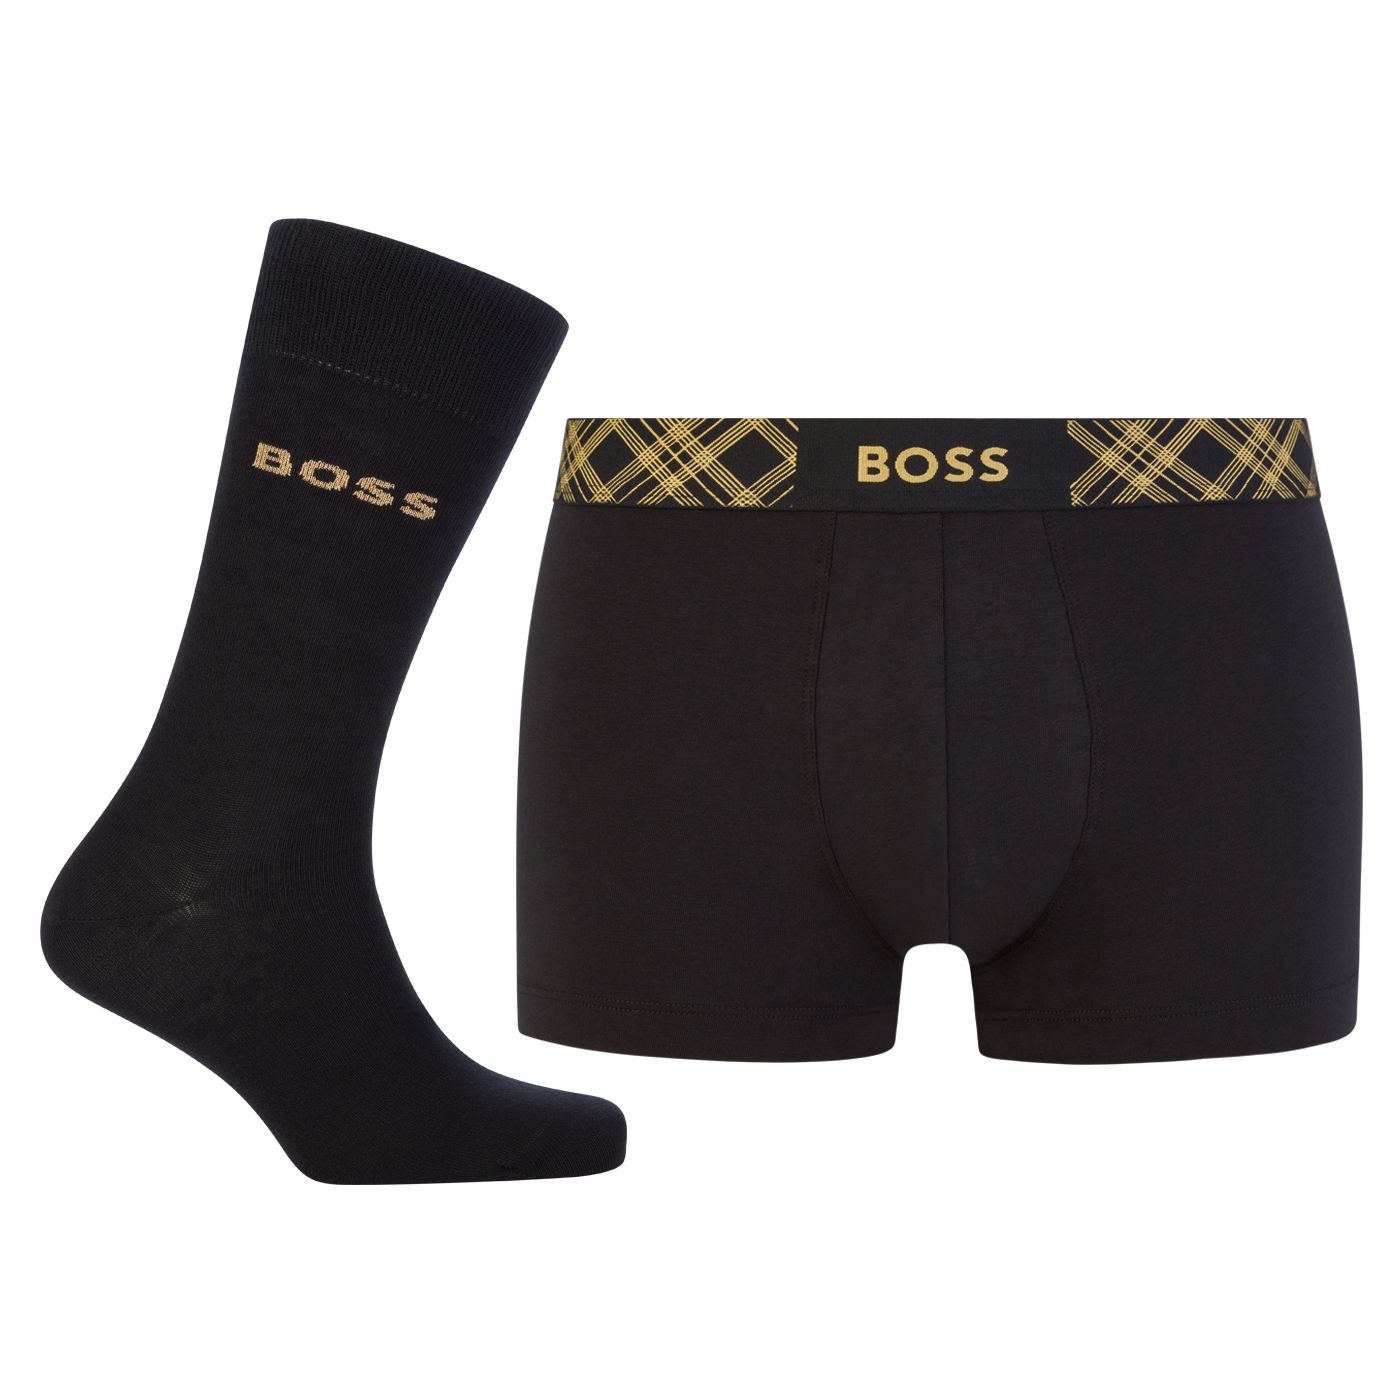 Hugo Boss Pánska sada - boxerky a ponožky BOSS 50500374-001 L